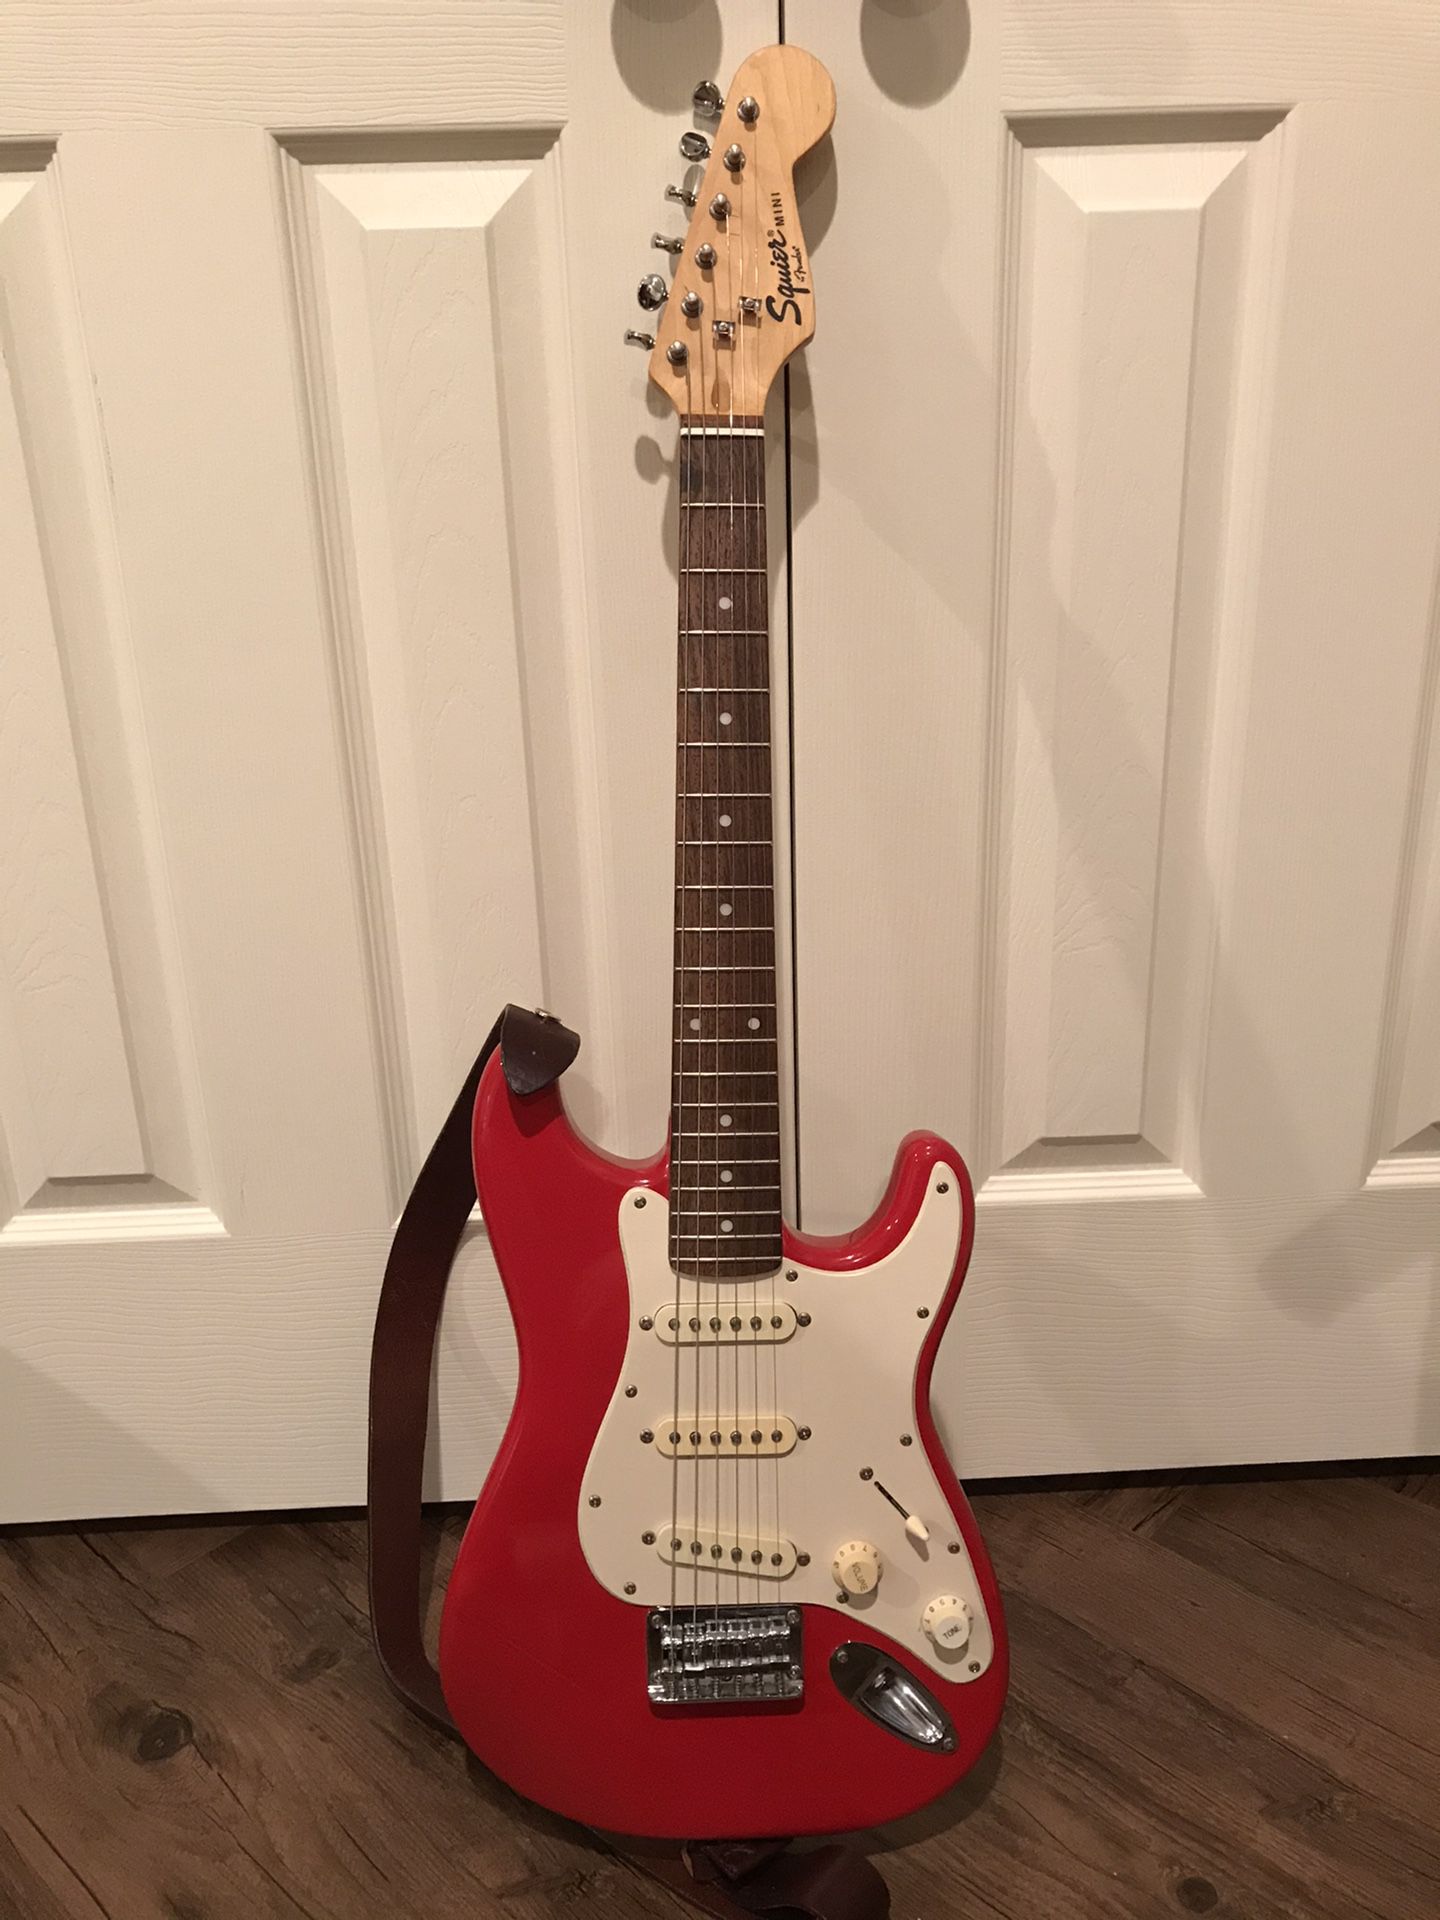 Fender Strat mini electric guitar